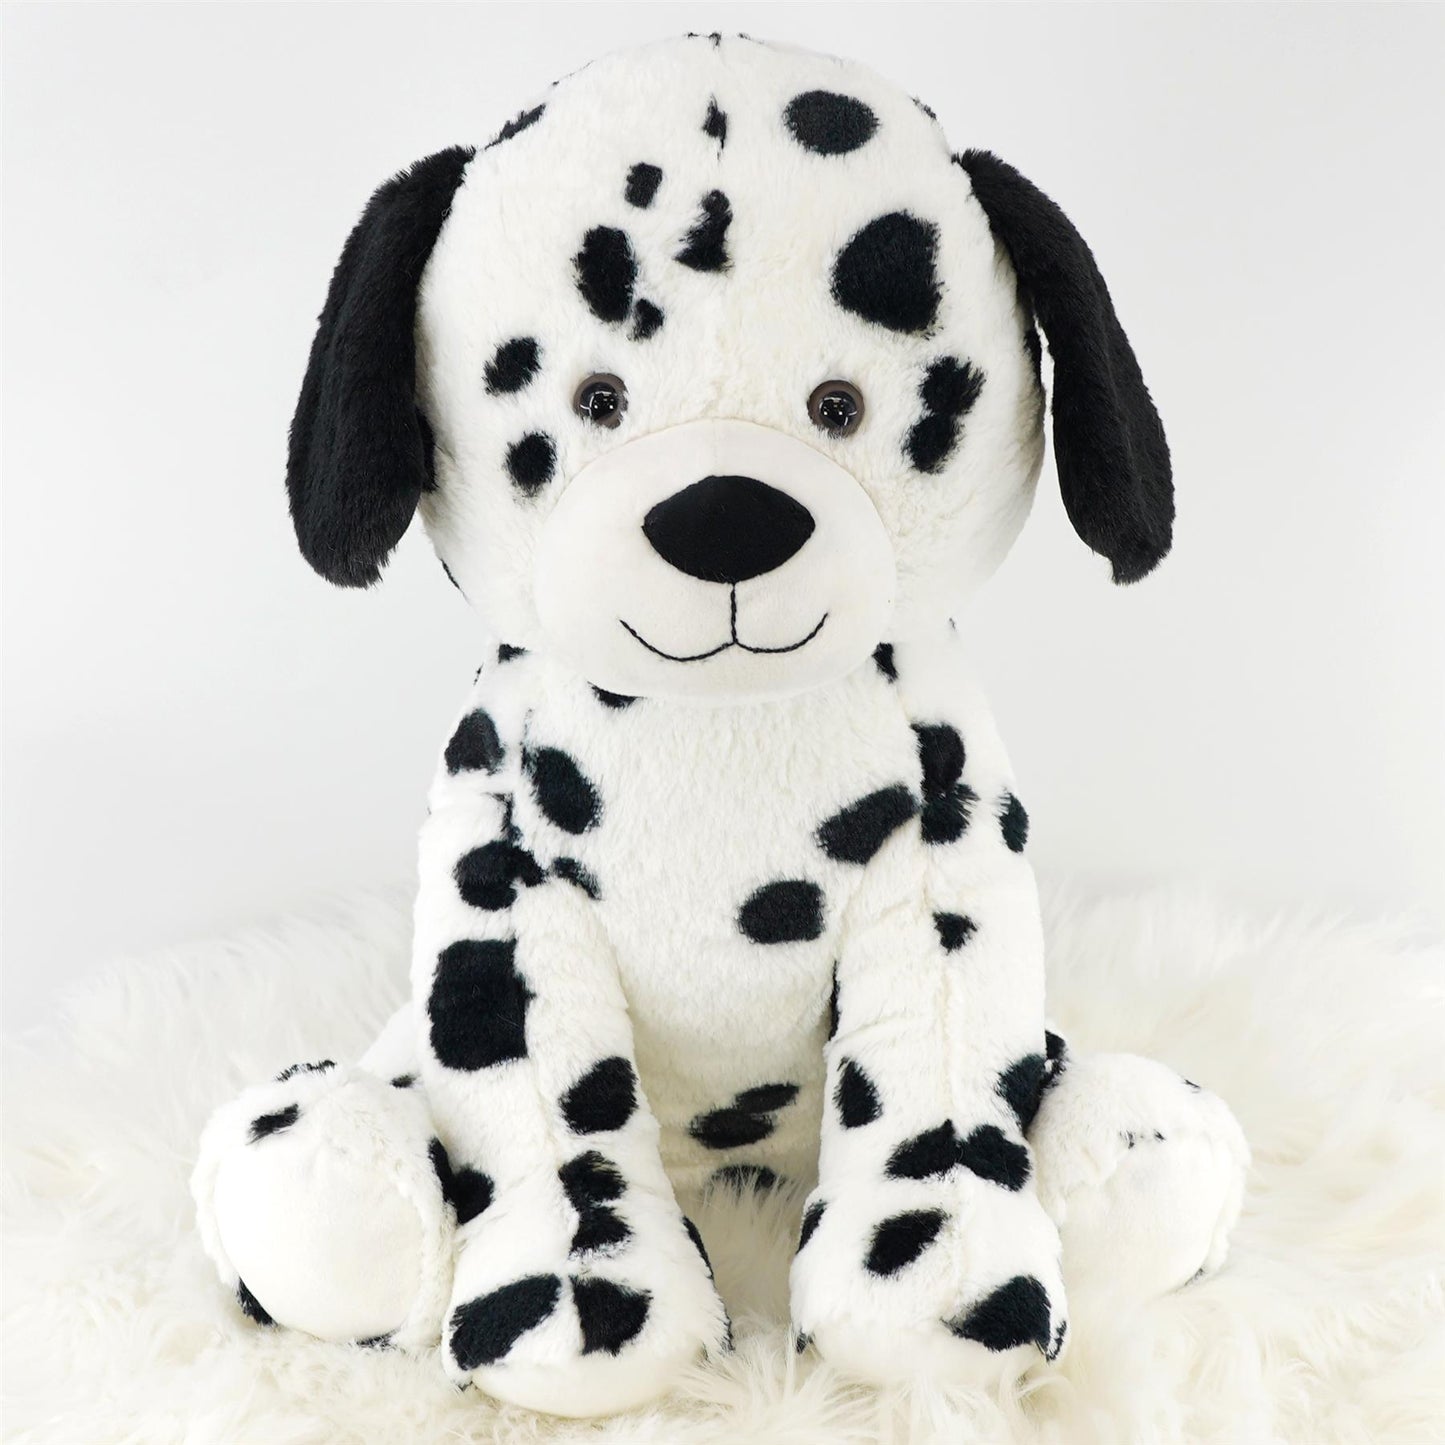 15" Plush Puppy Soft Dalmatian Dog Toy by The Magic Toy Shop - UKBuyZone